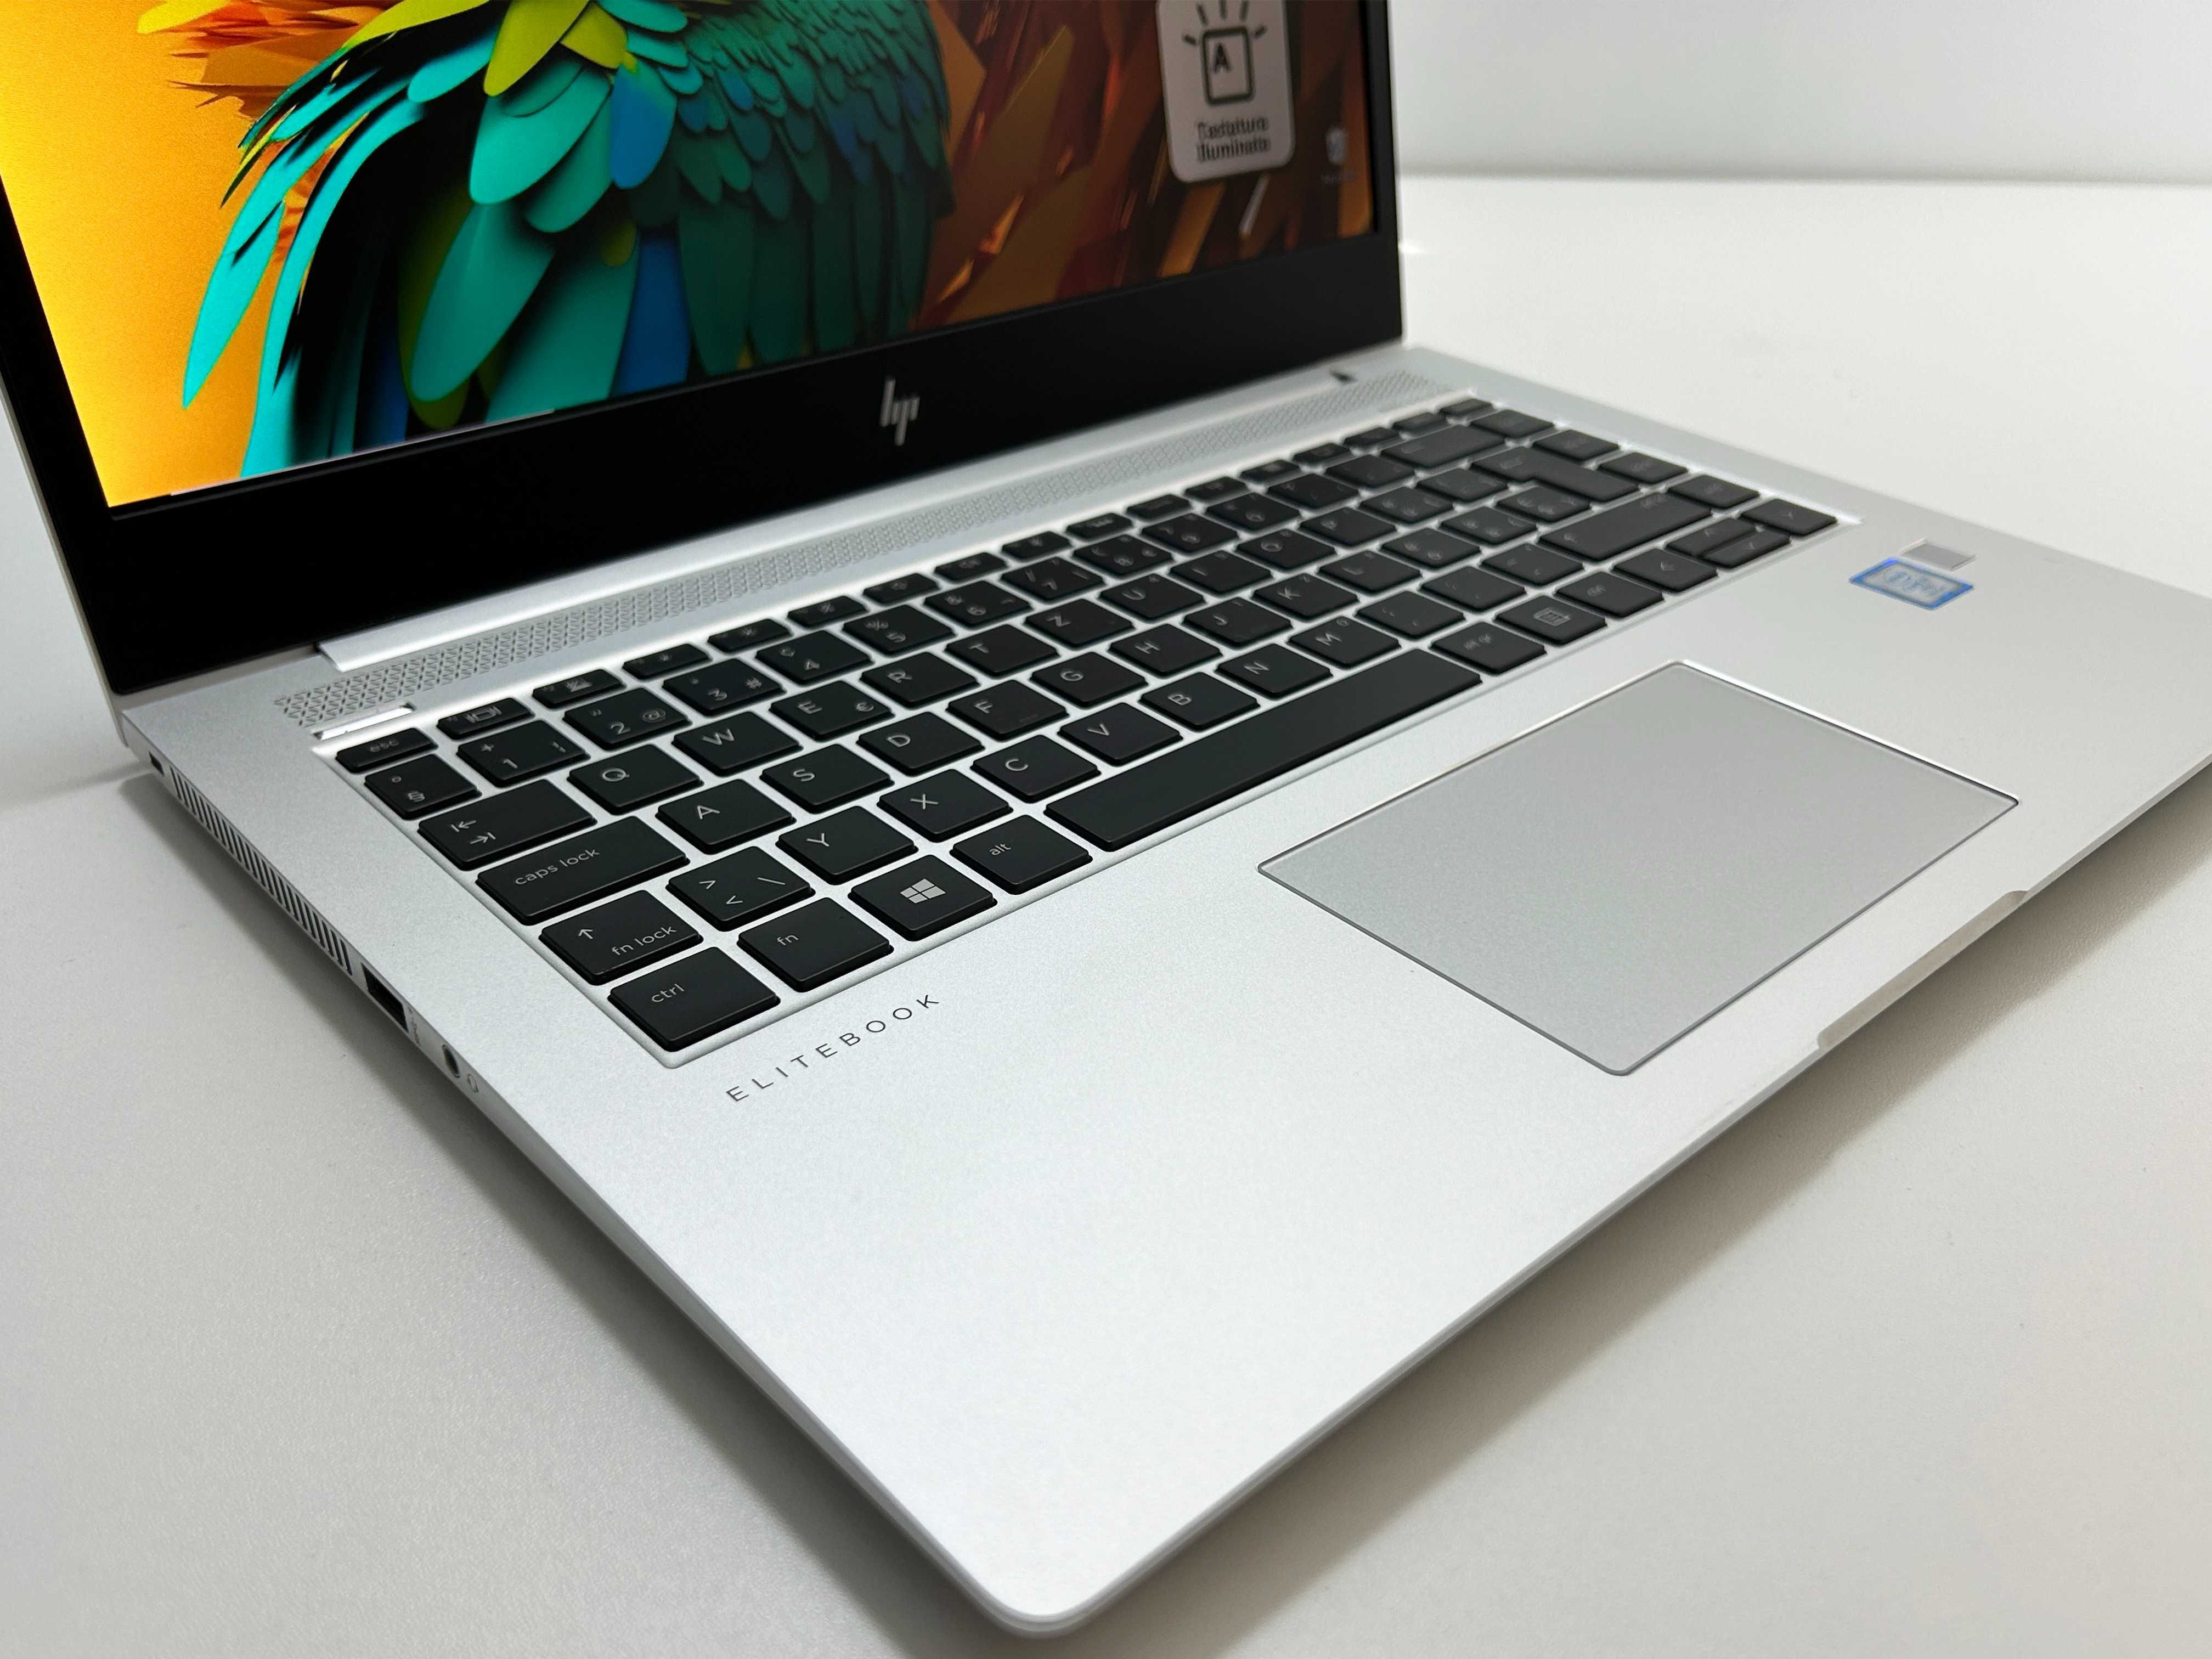 Laptop HP EliteBook i7 gen 7th 256GBSSD Bang&Olufsen ultrabook CA NOU